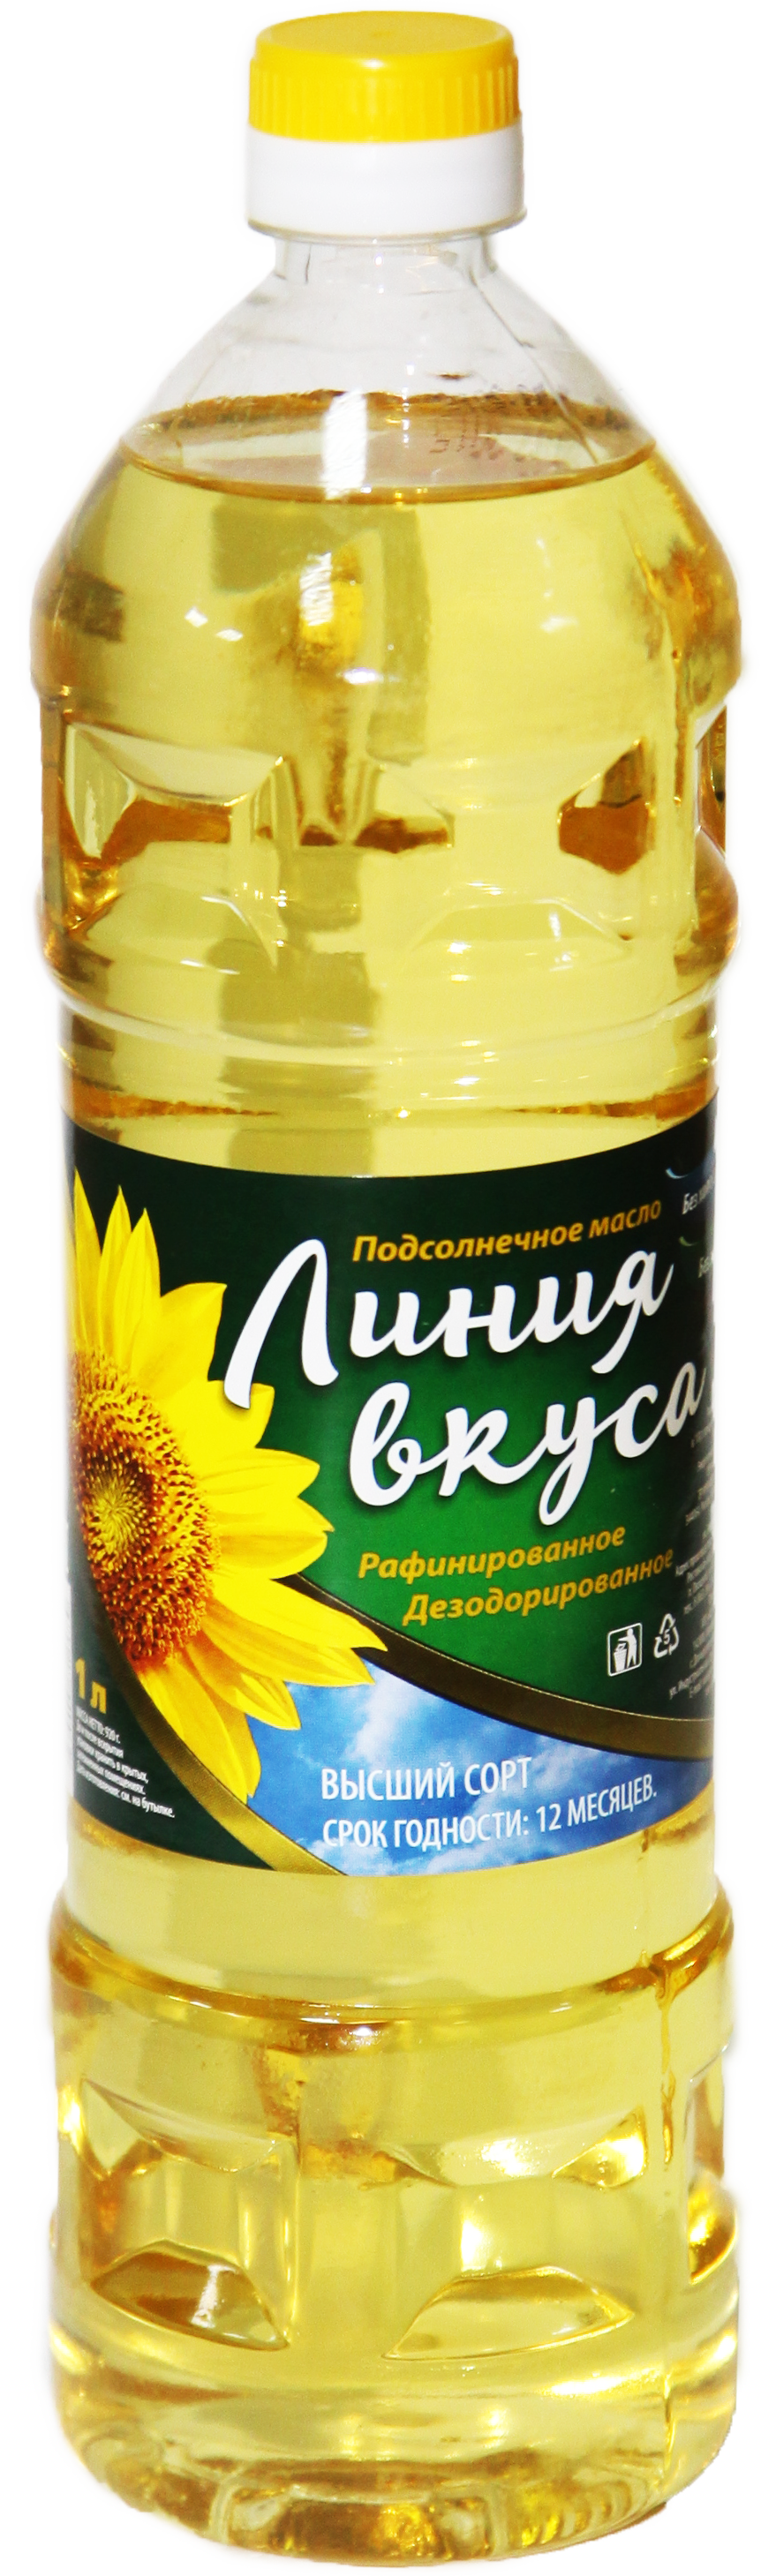 Sunflower oil PNG